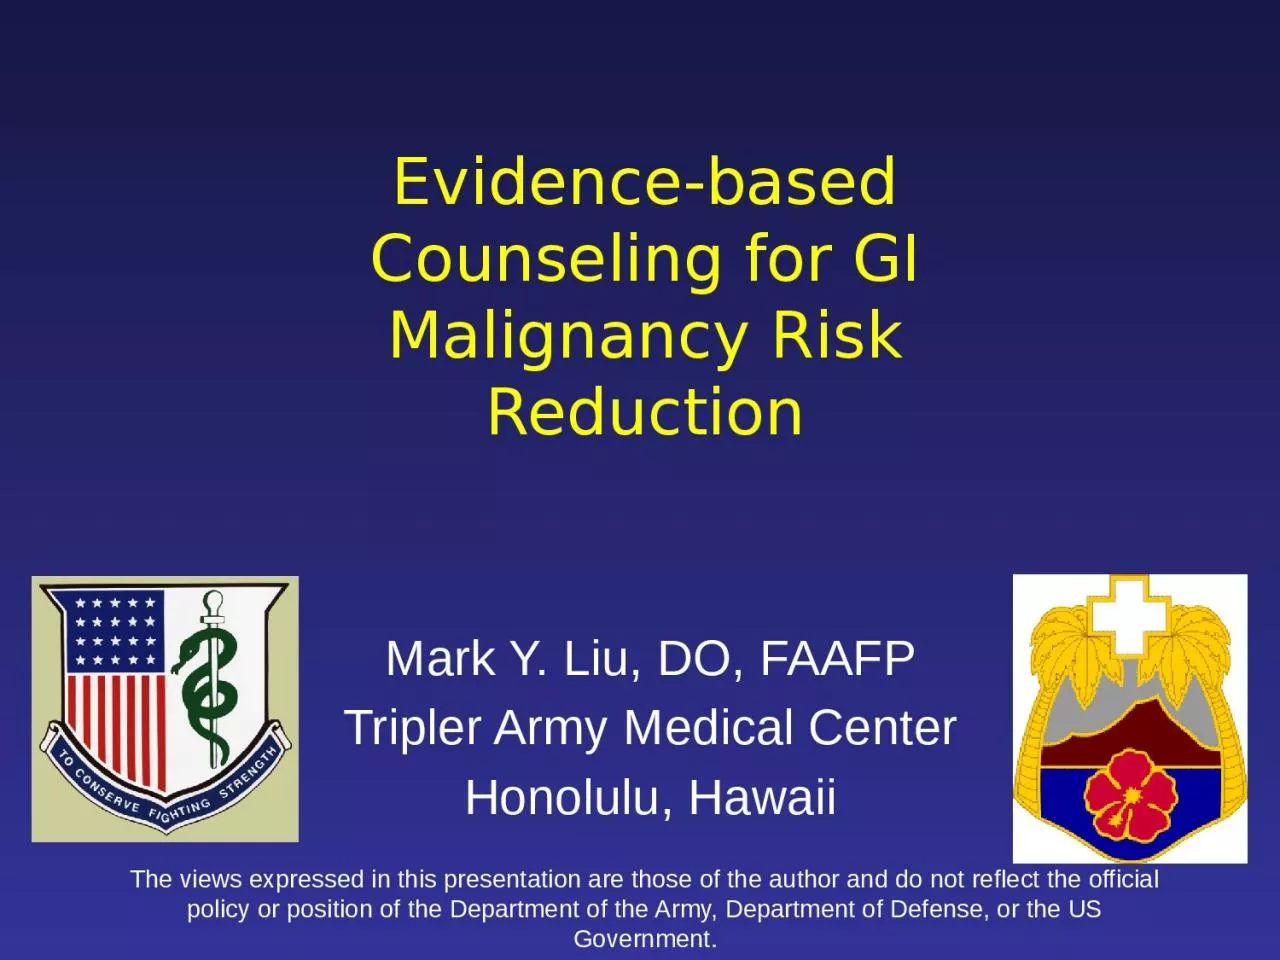 Evidence-based Counseling for GI Malignancy Risk Reduction